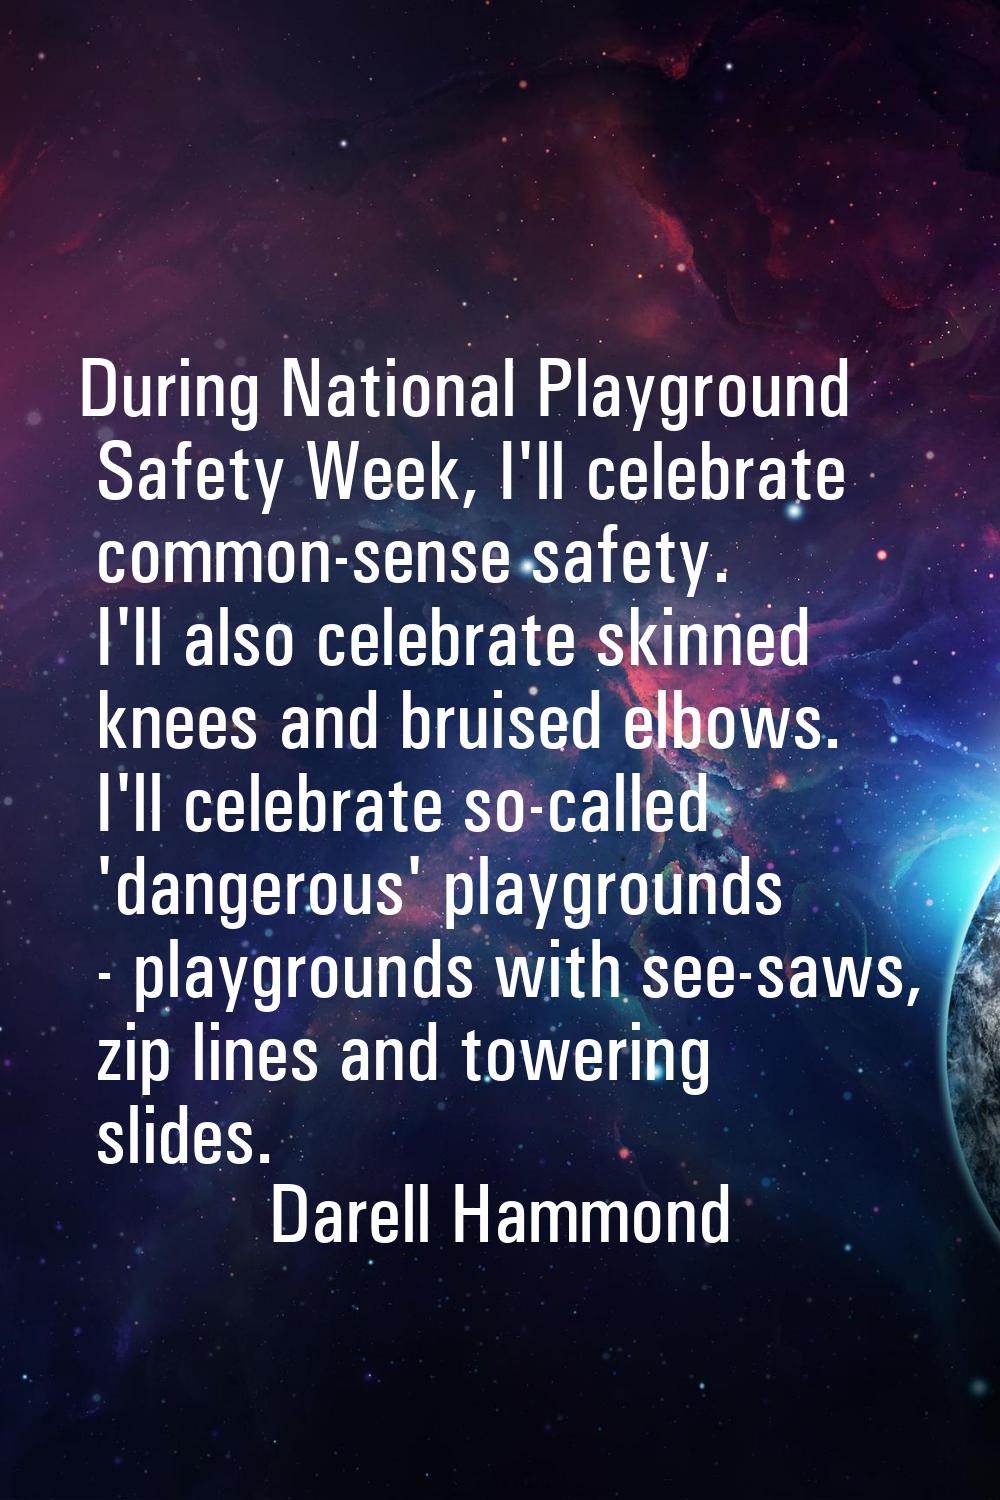 During National Playground Safety Week, I'll celebrate common-sense safety. I'll also celebrate ski